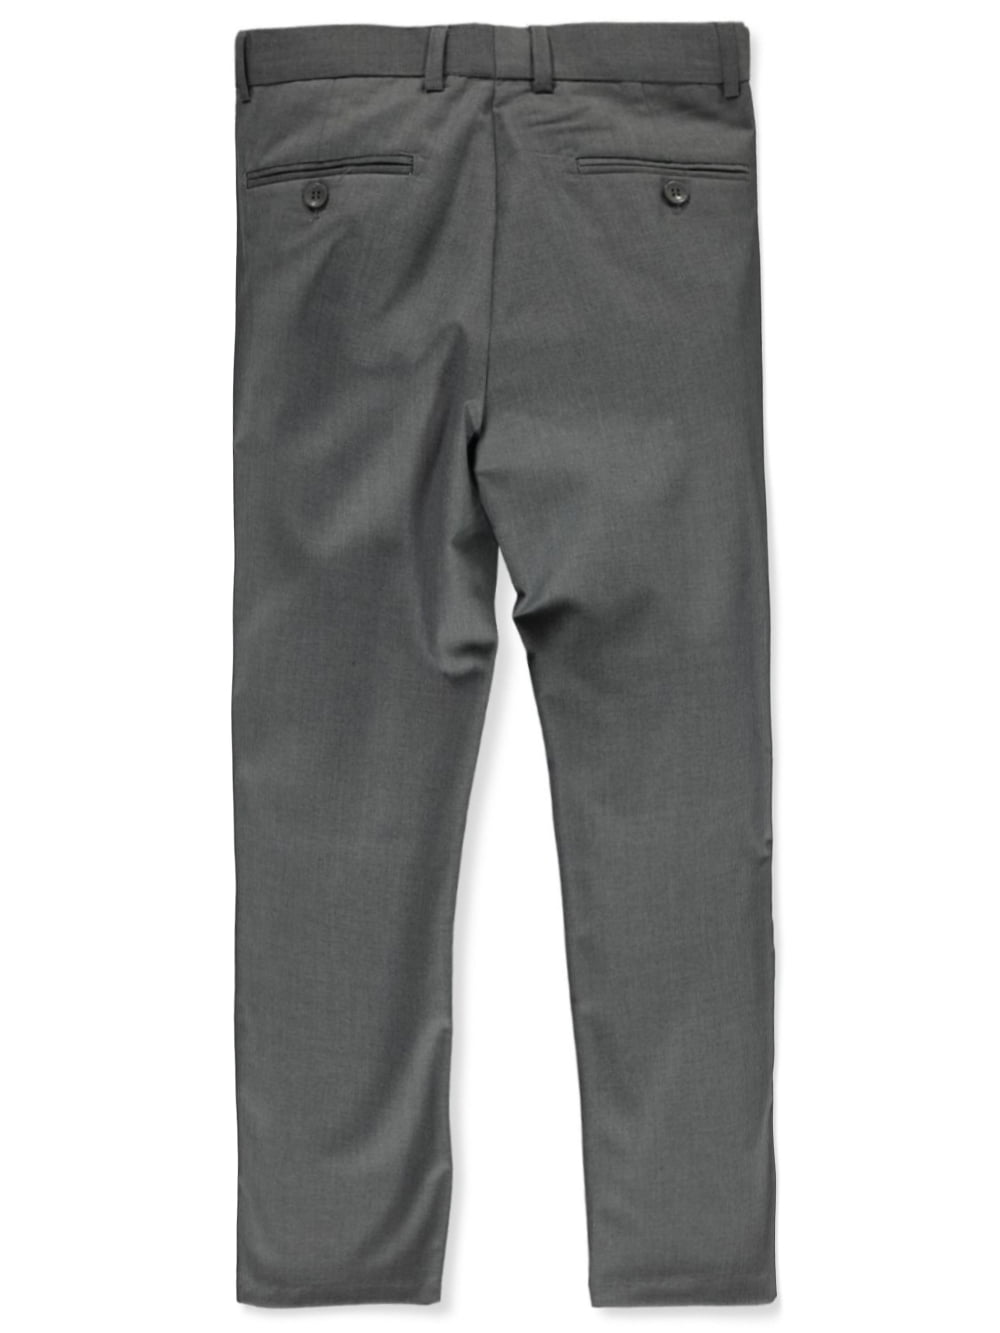 Cat & Jack Navy Dress Pants Slacks BOYS KIDS Size 8 Adjustable Waist |  eBay